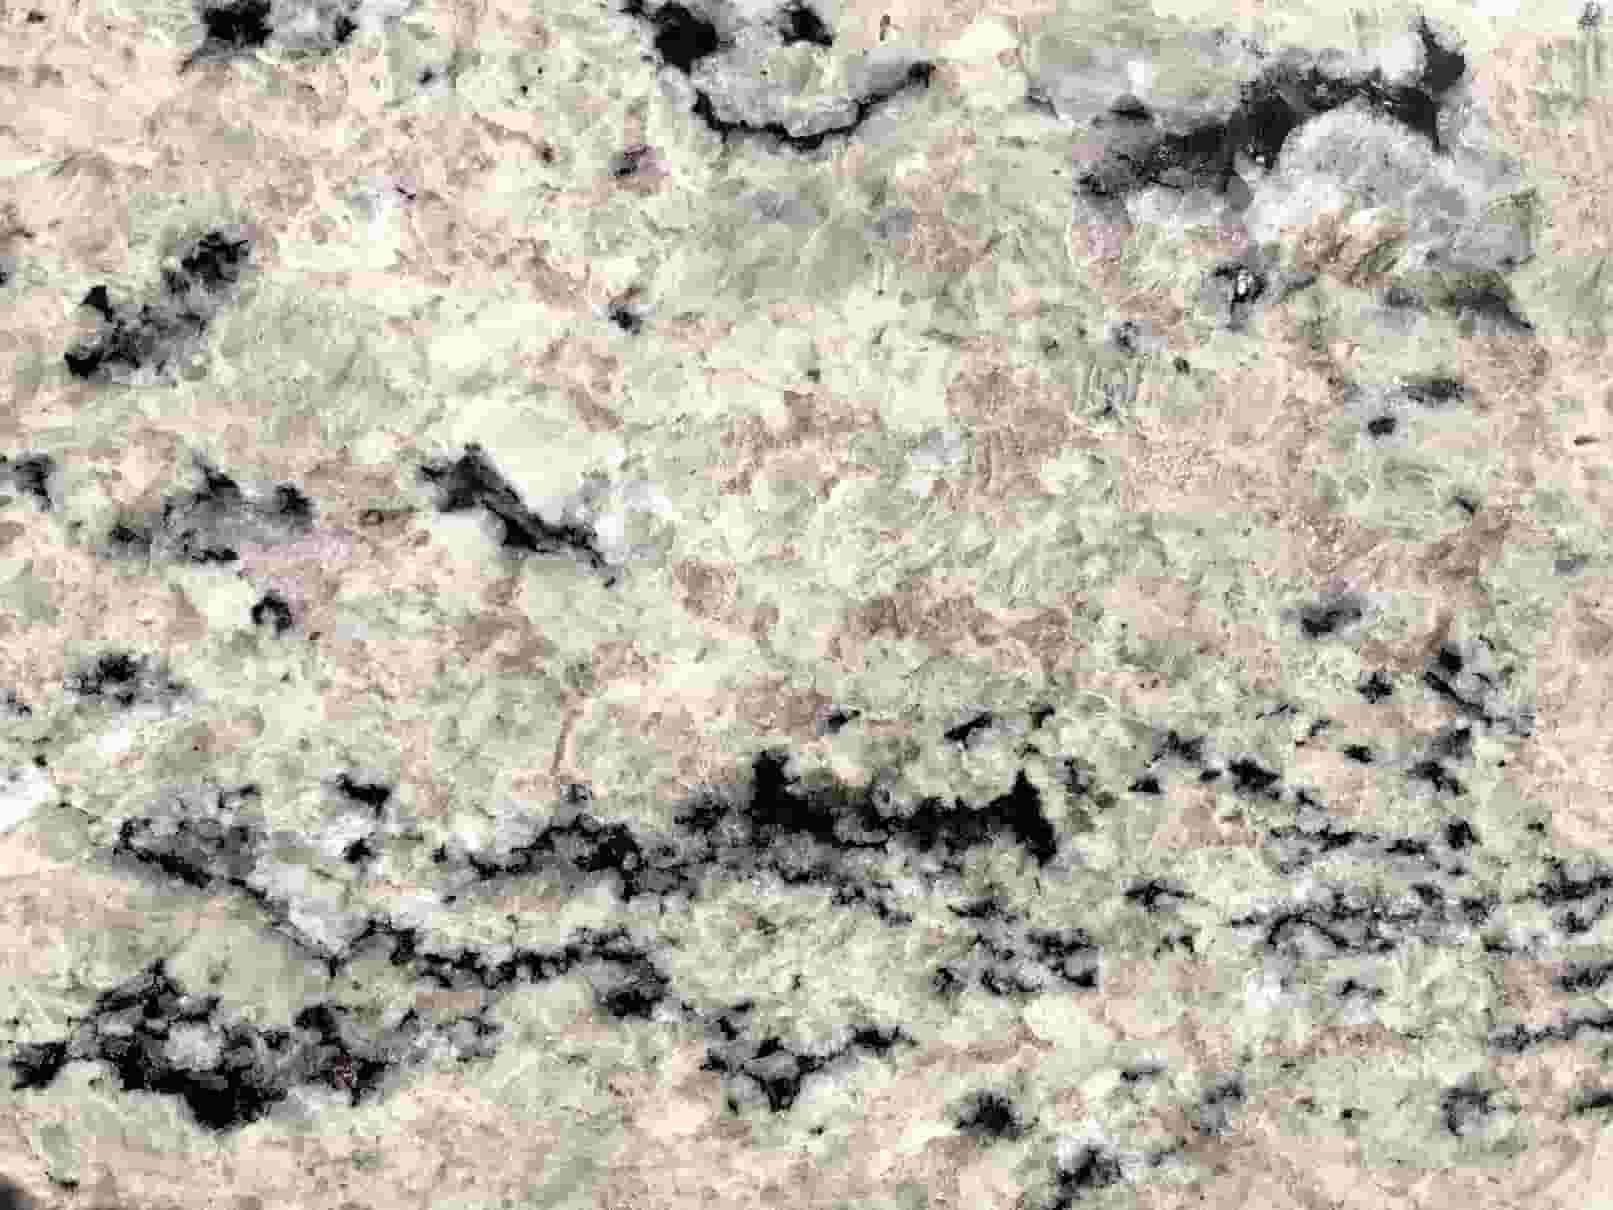 Types of white granite